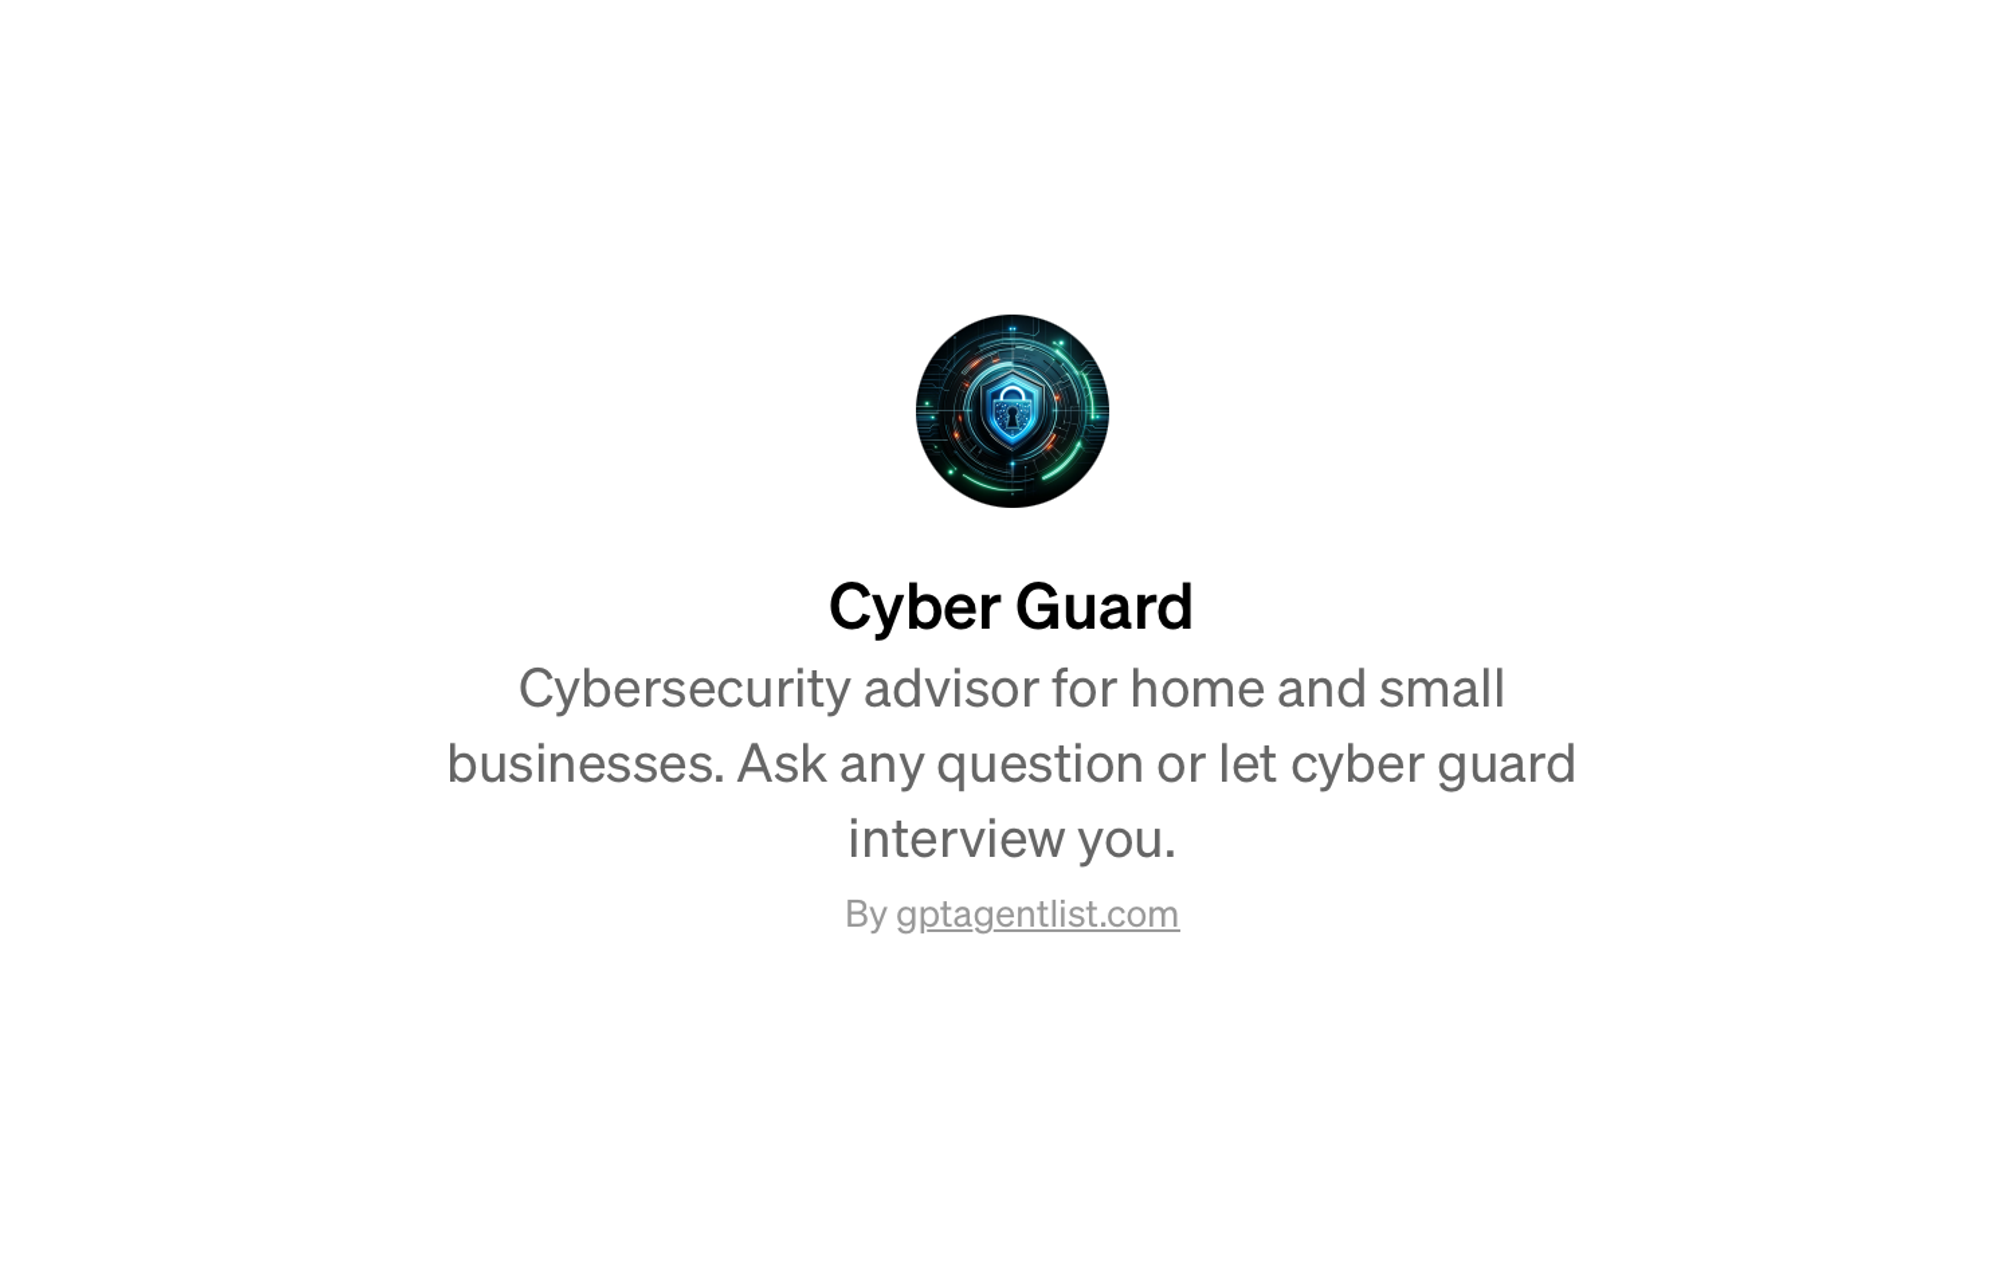 Cyber Guard